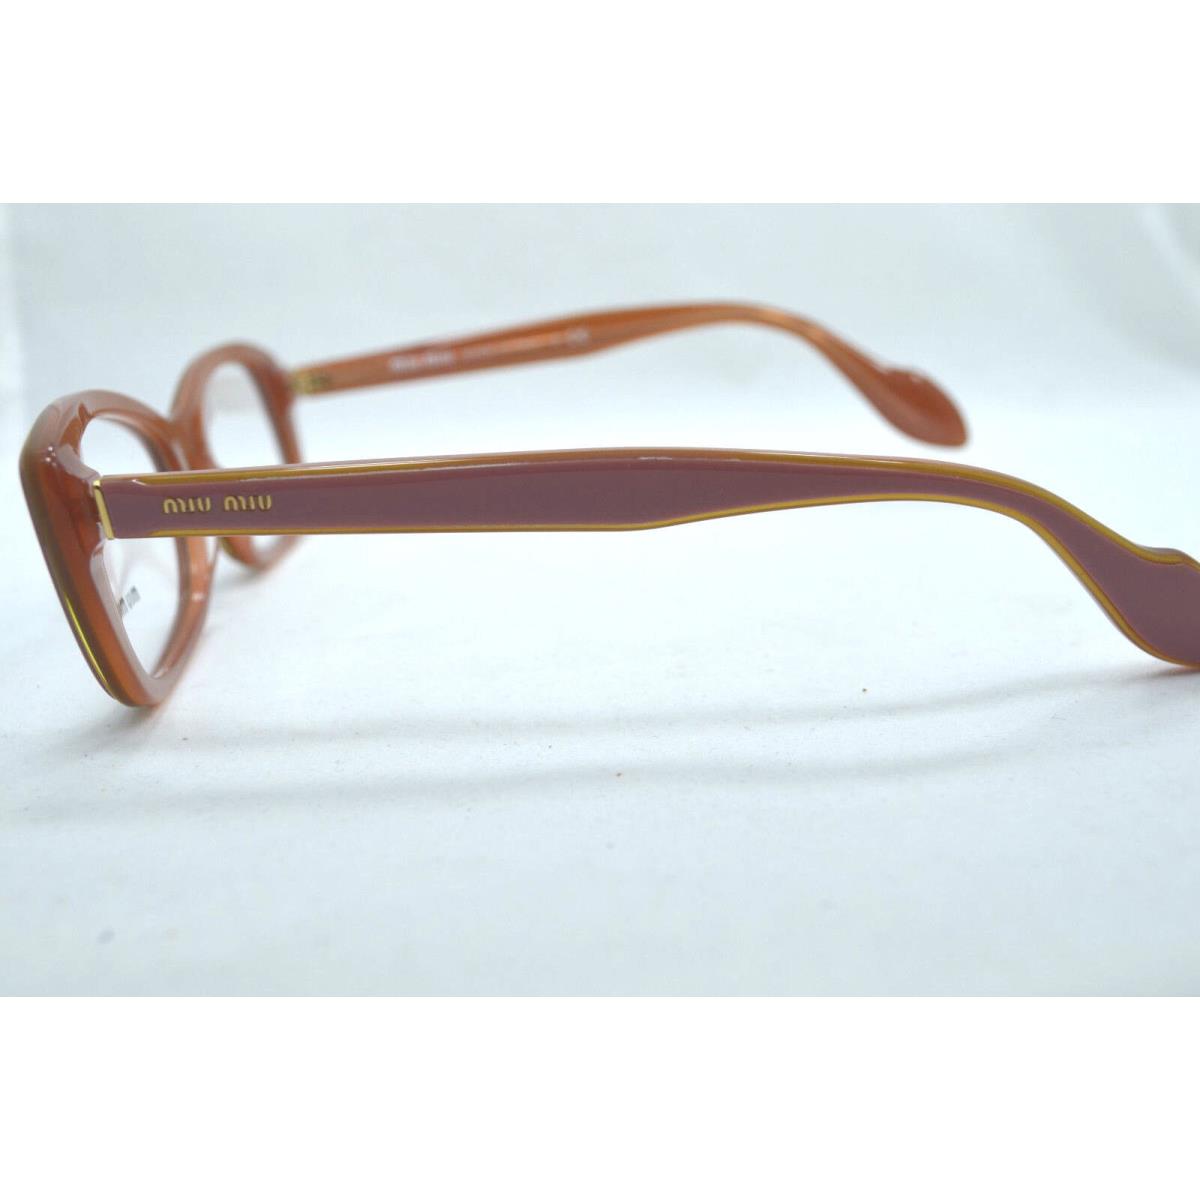 Miu Miu eyeglasses  - Multi-Color Frame 2